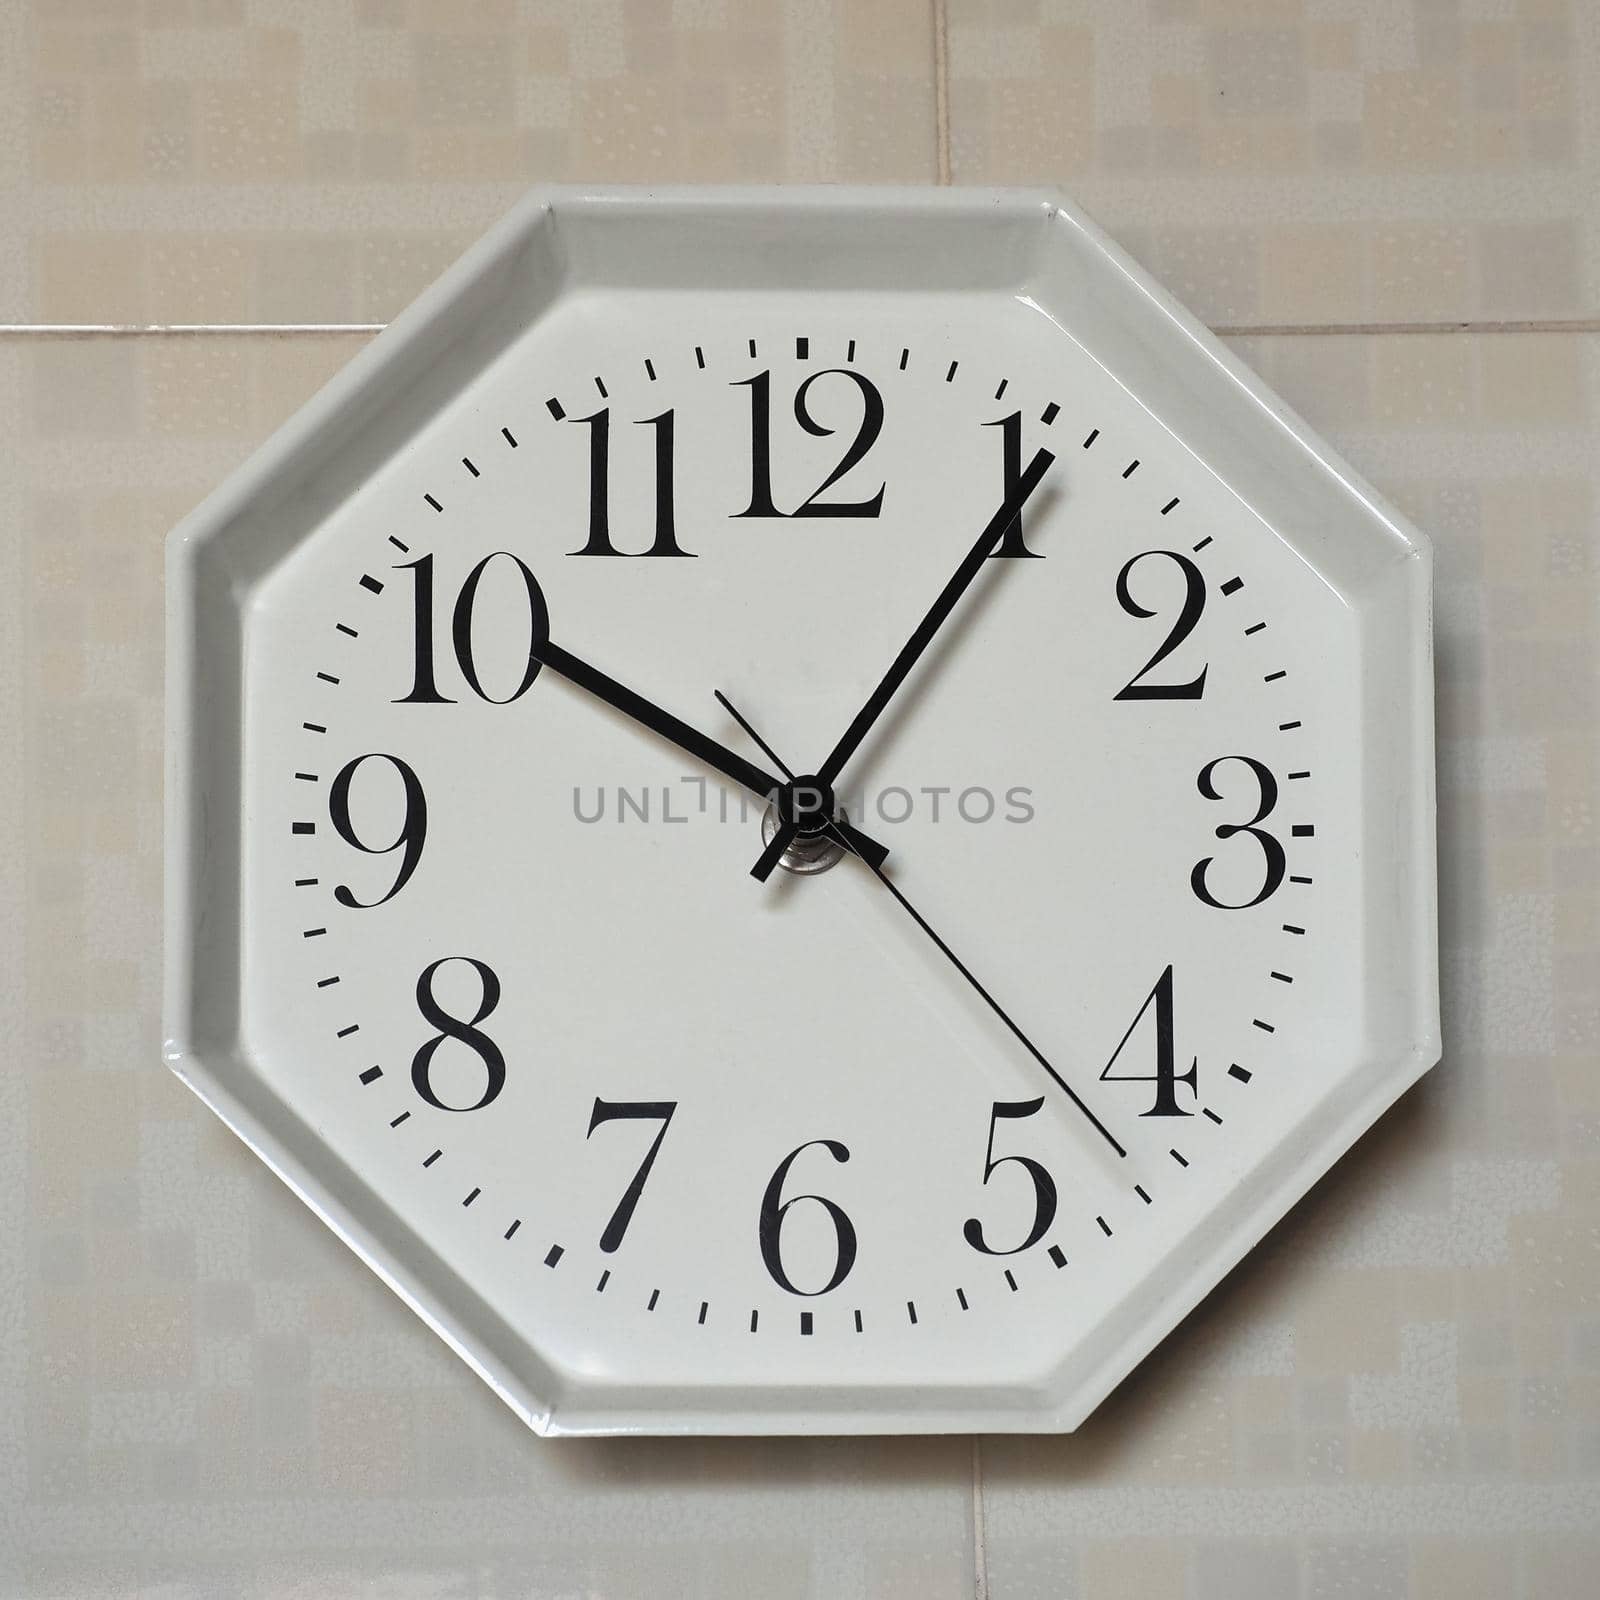 wall clock at five past ten by claudiodivizia